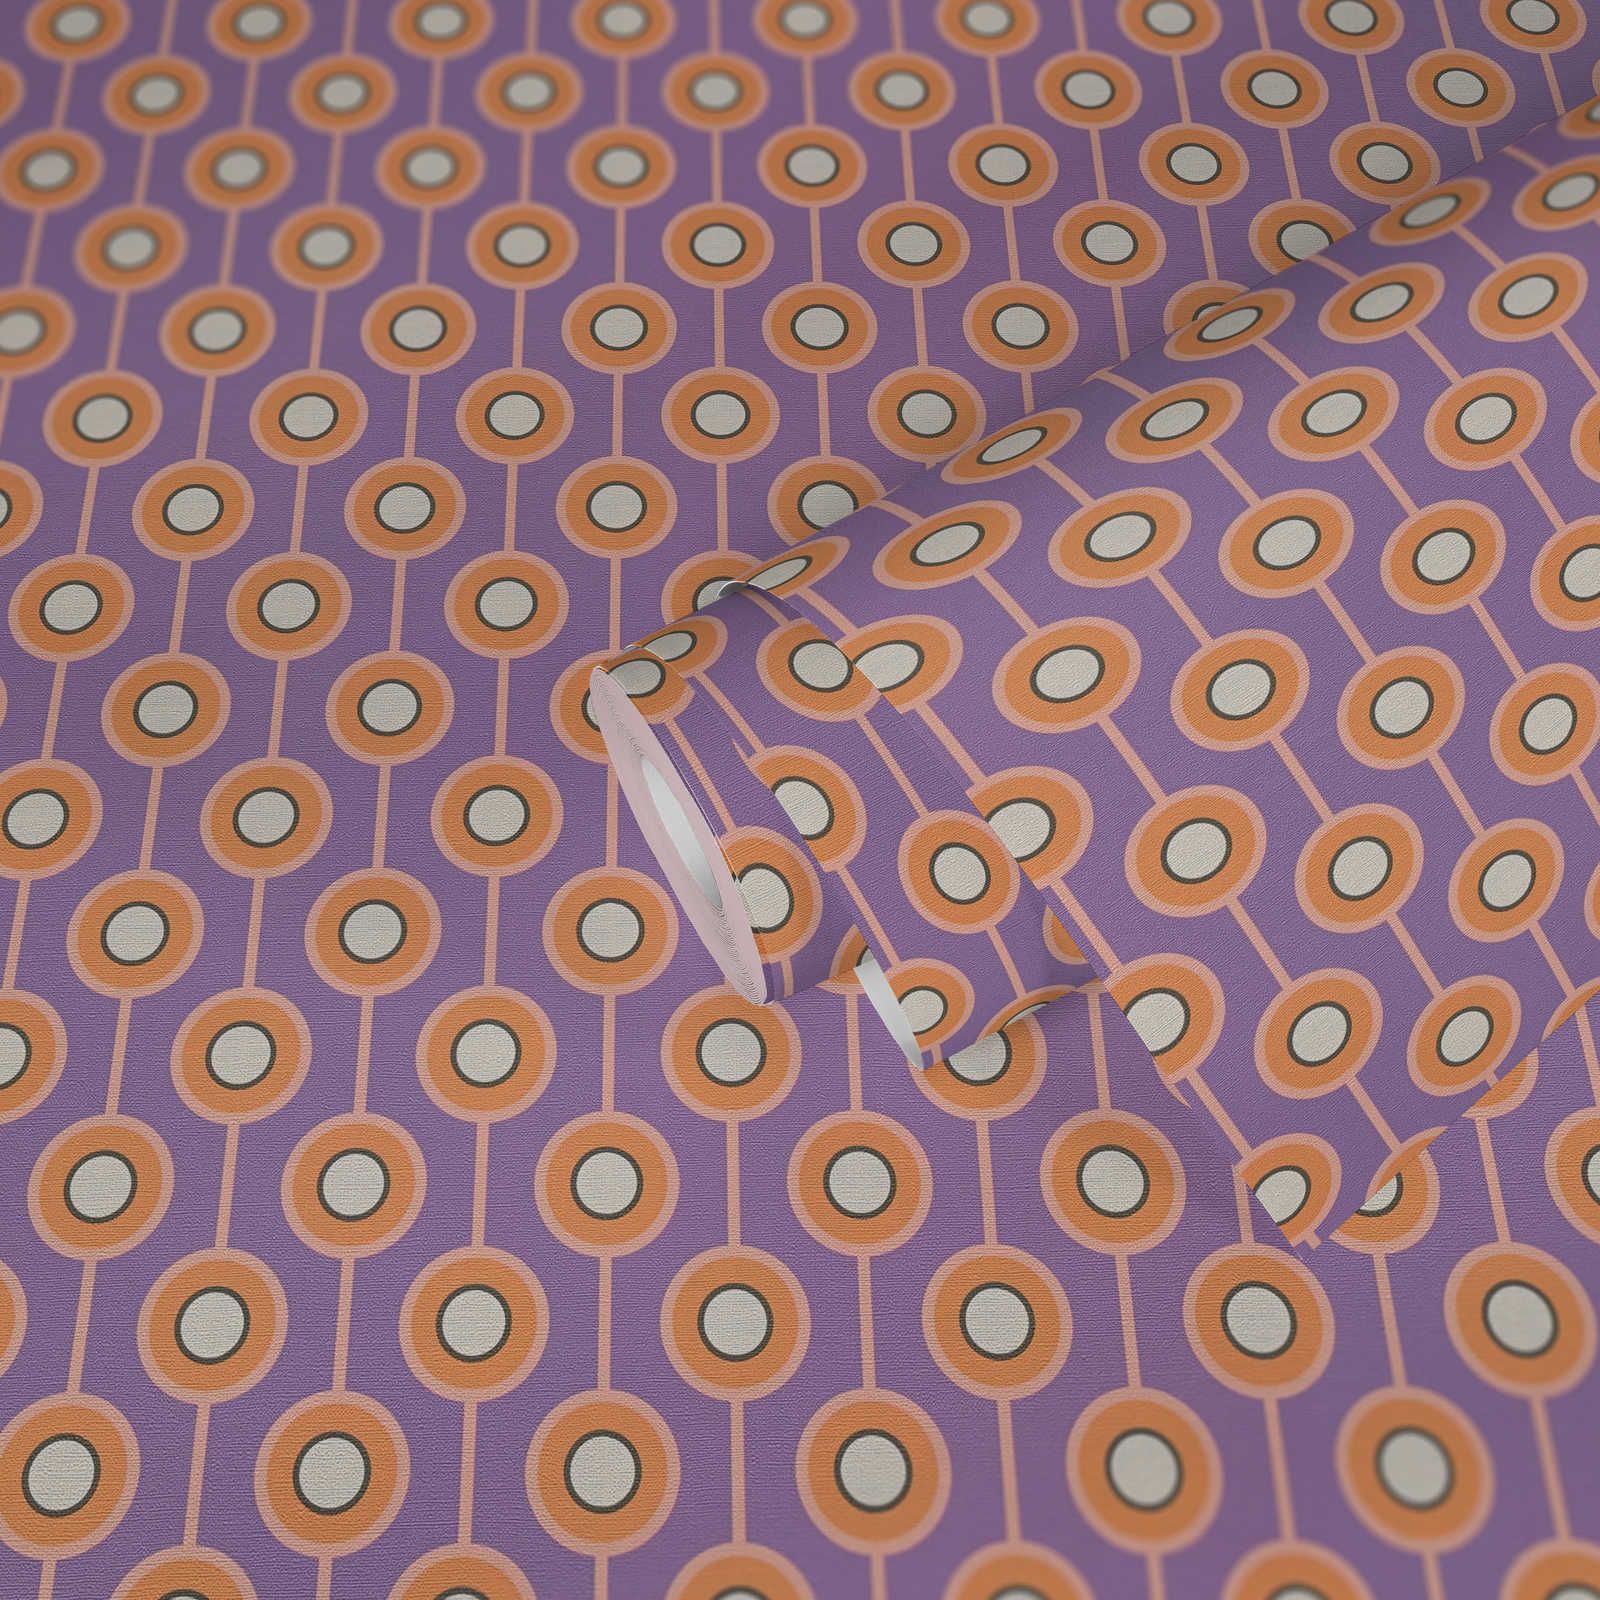             Abstract cirkelpatroon op vliesbehang in retrostijl - paars, oranje, beige
        